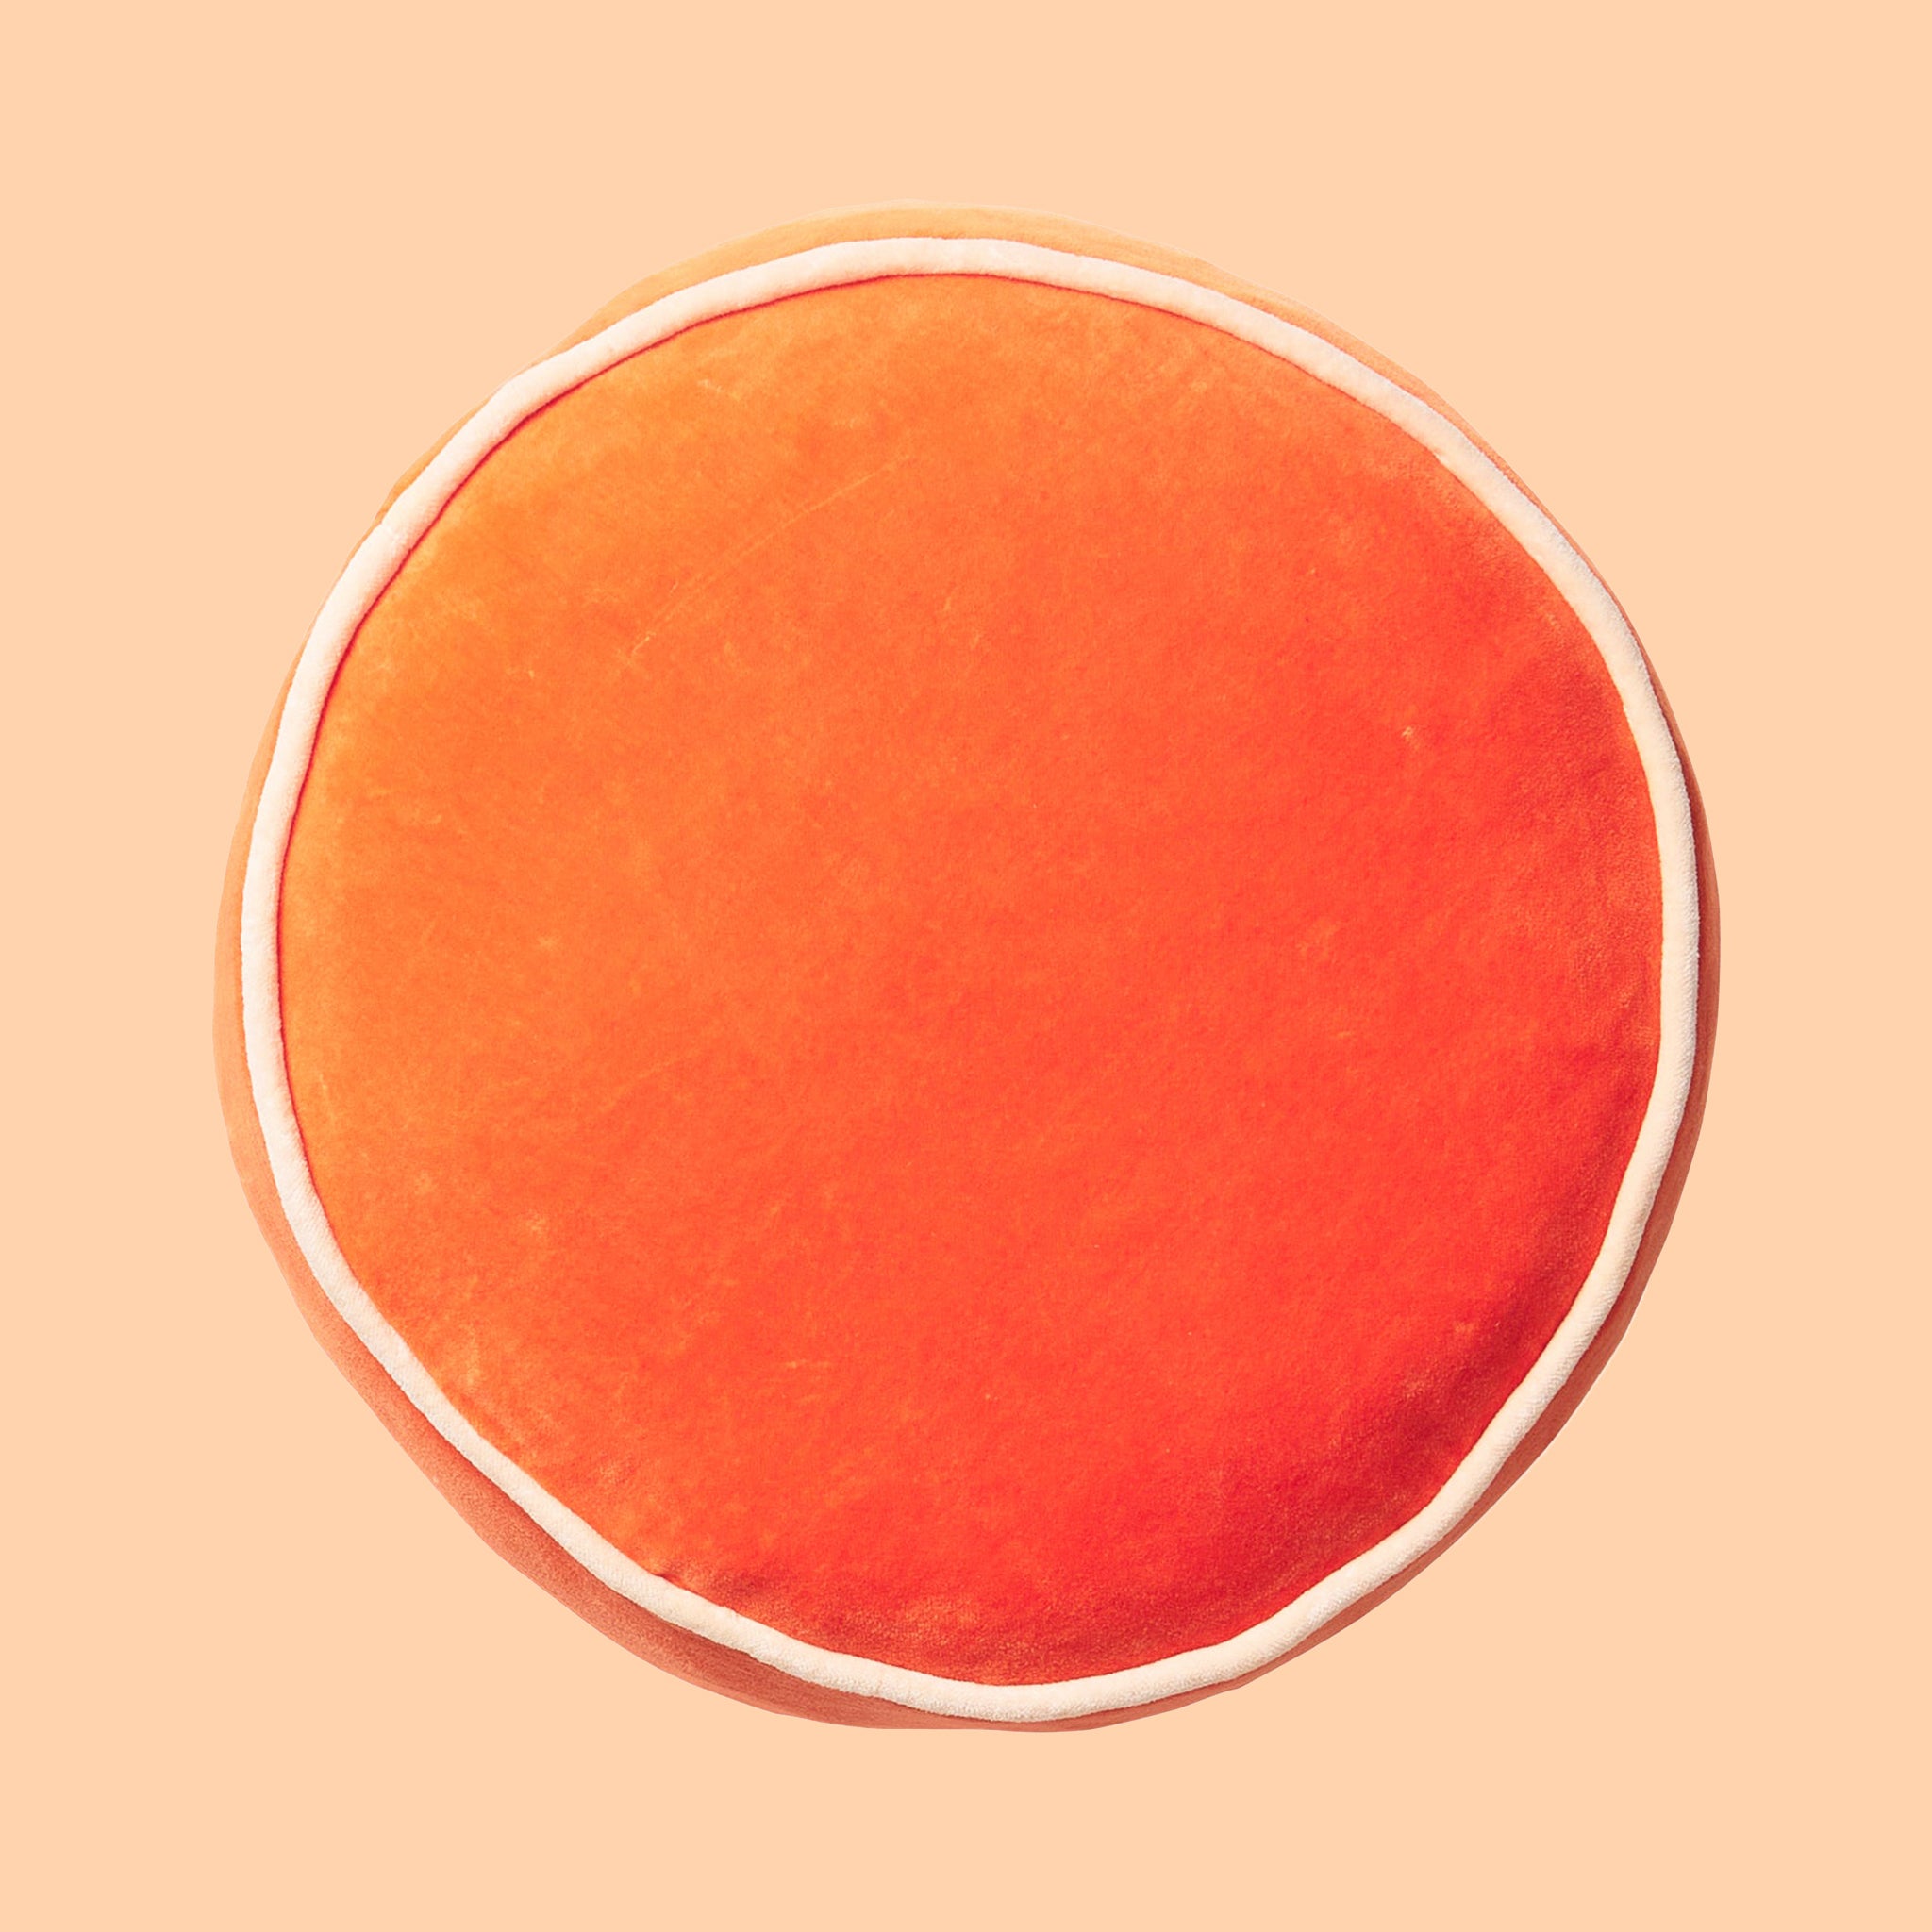 A round orange velvet pillow with an ivory edge. 